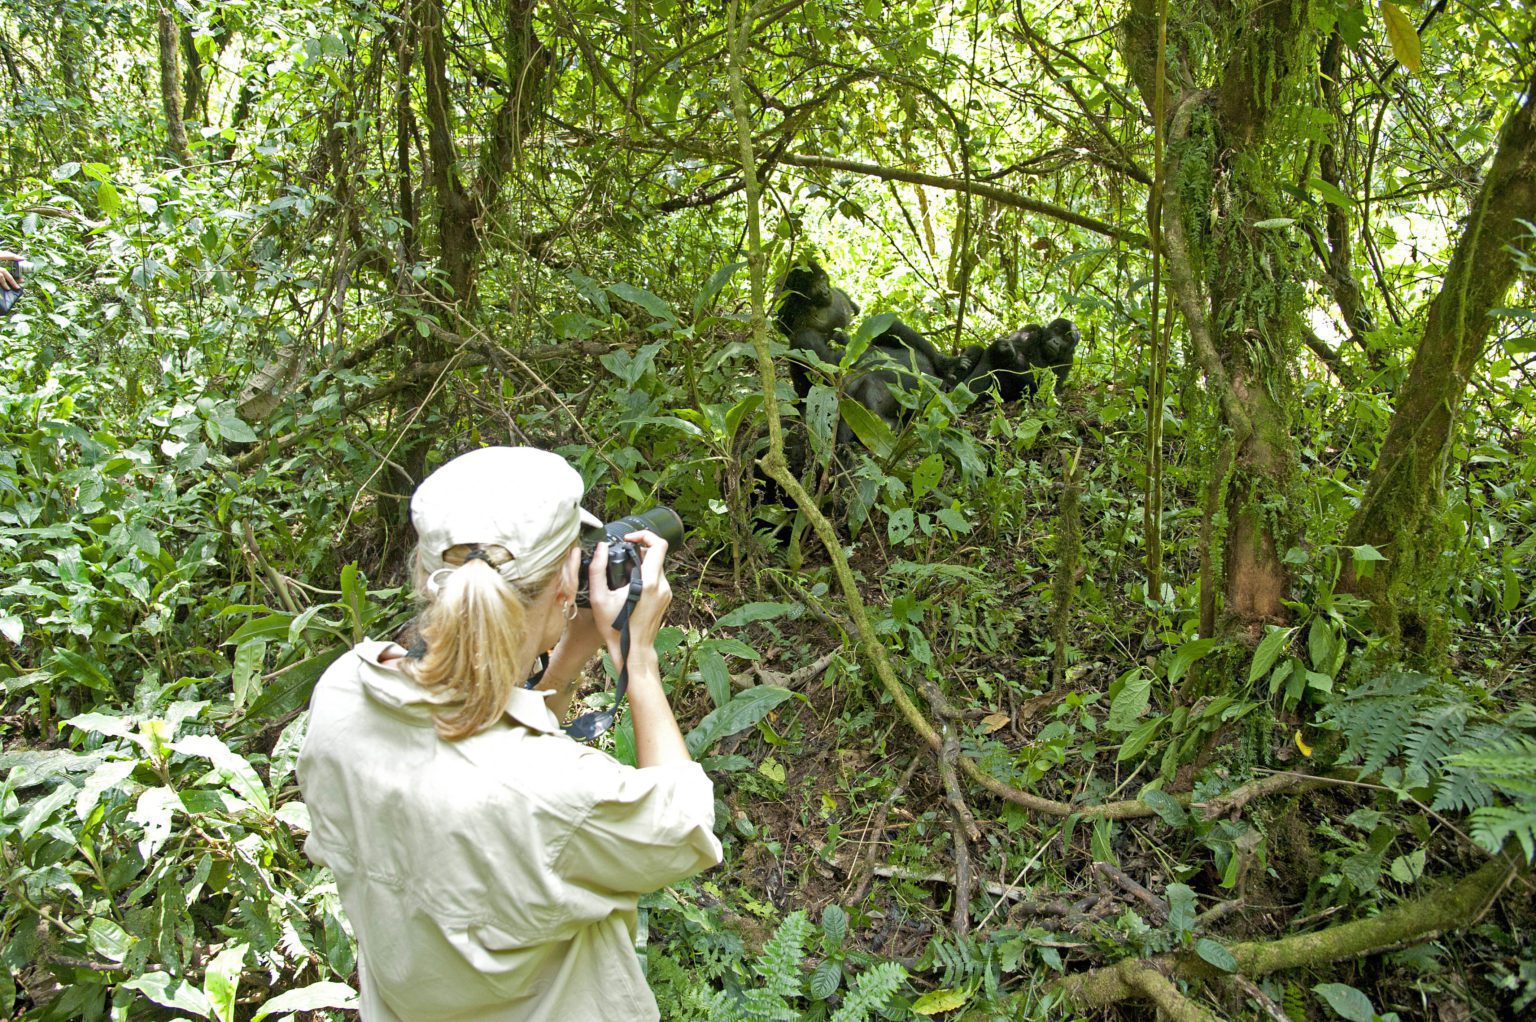 Woman taking photo of gorilla